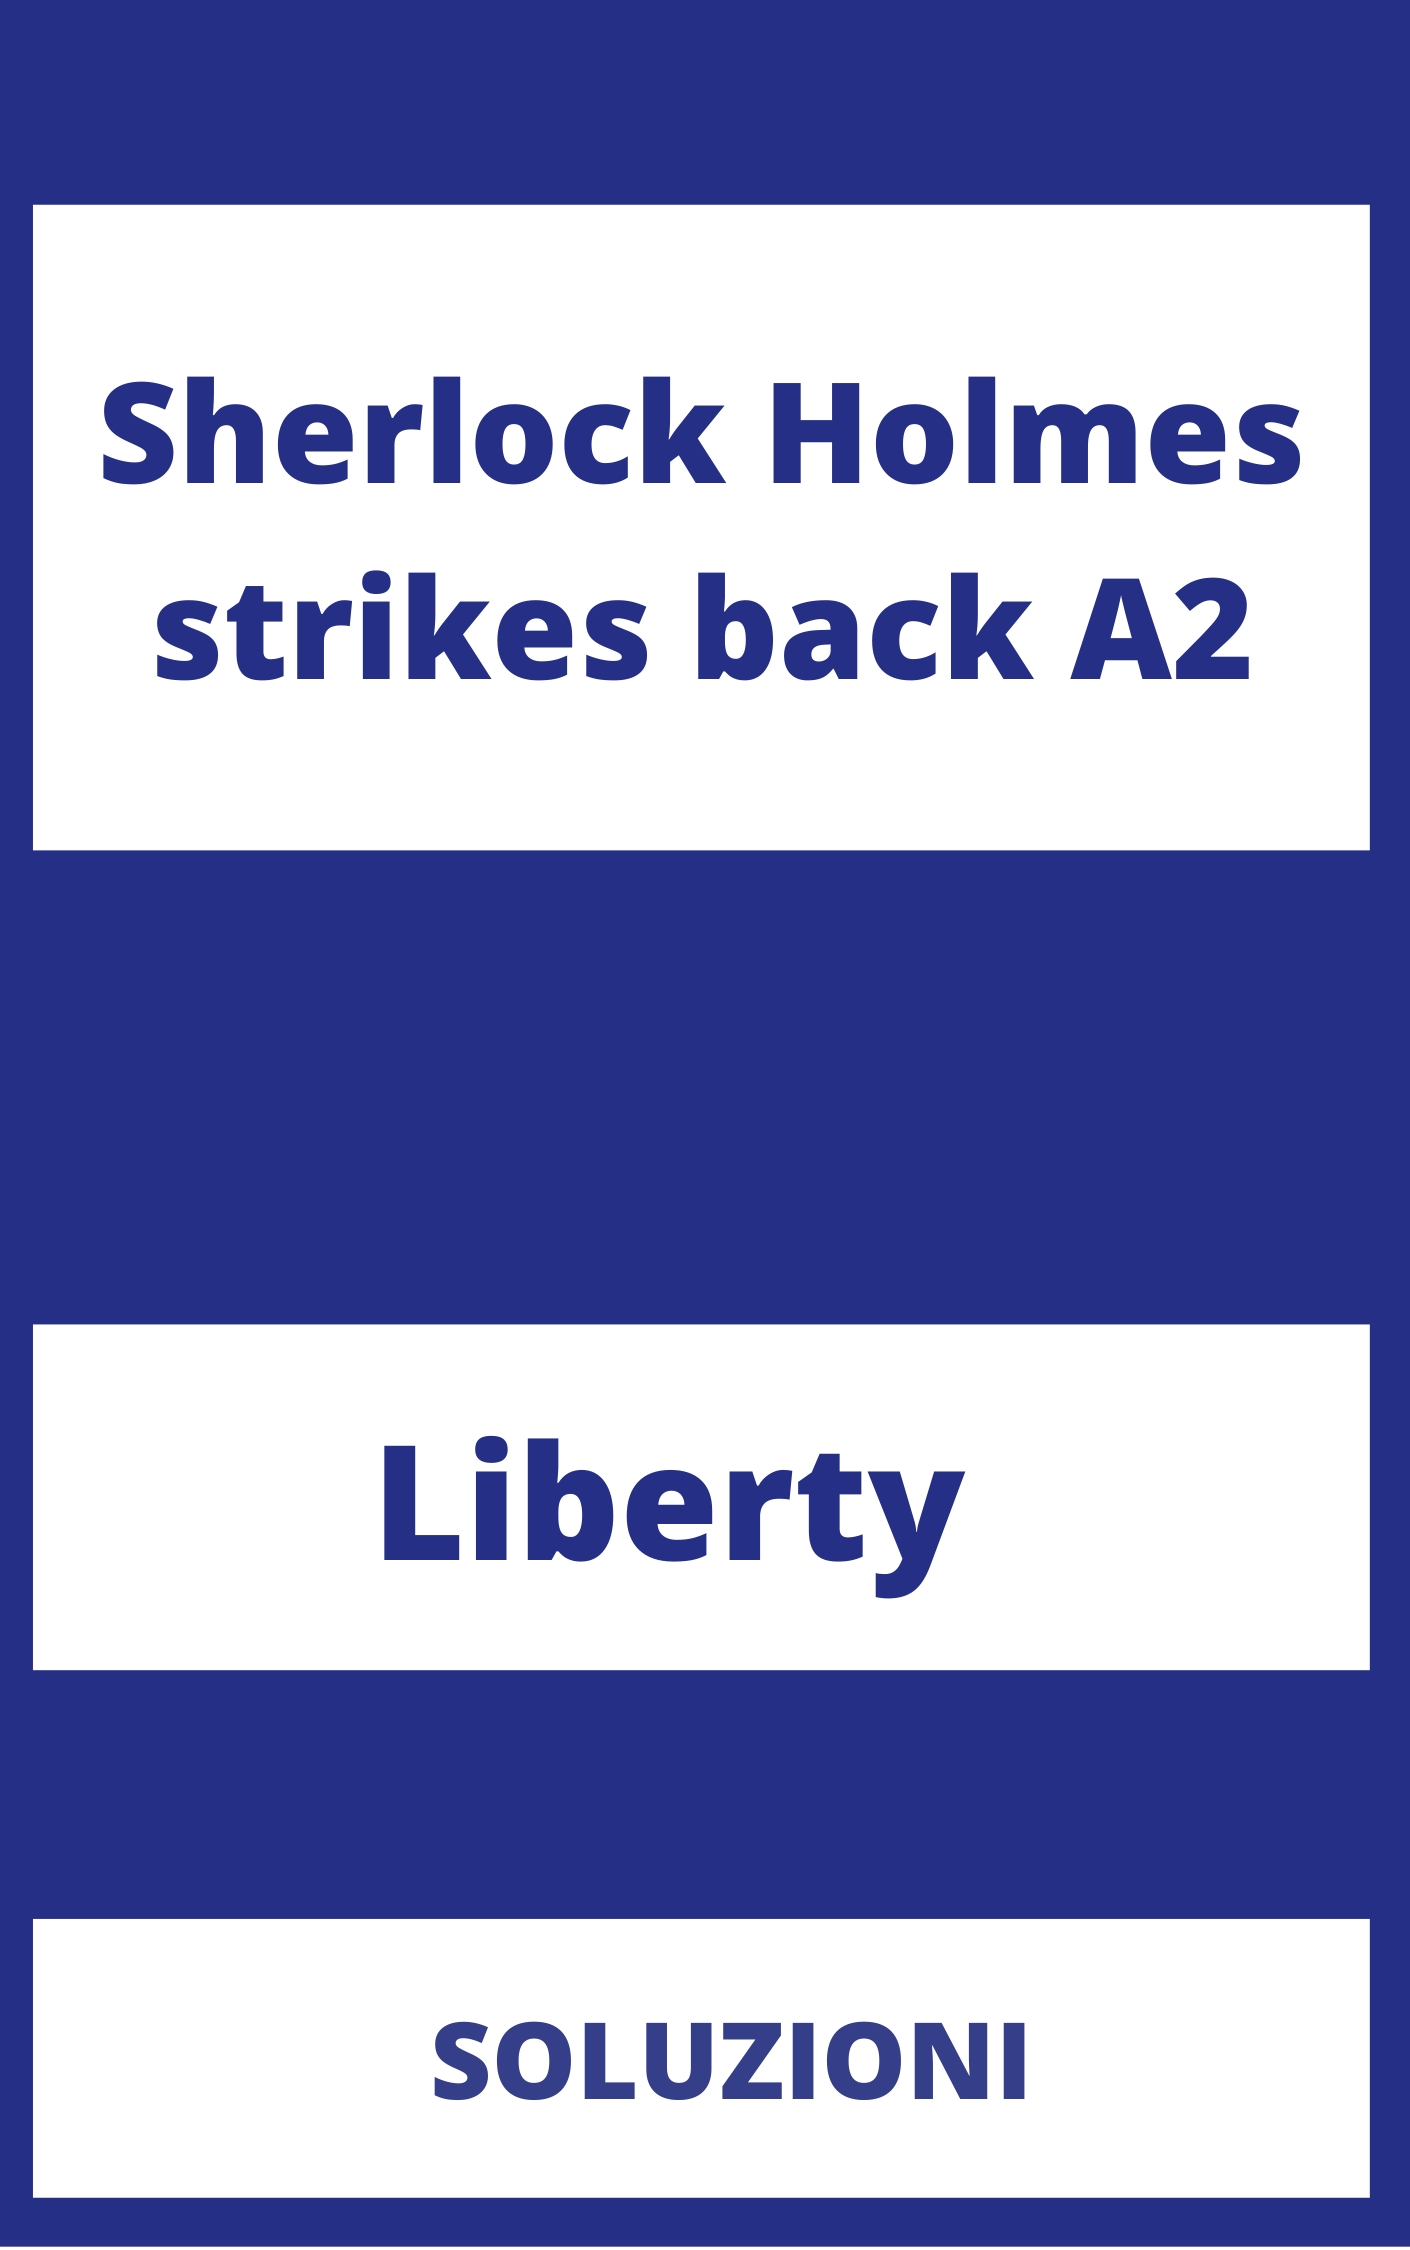 Sherlock Holmes strikes back A2